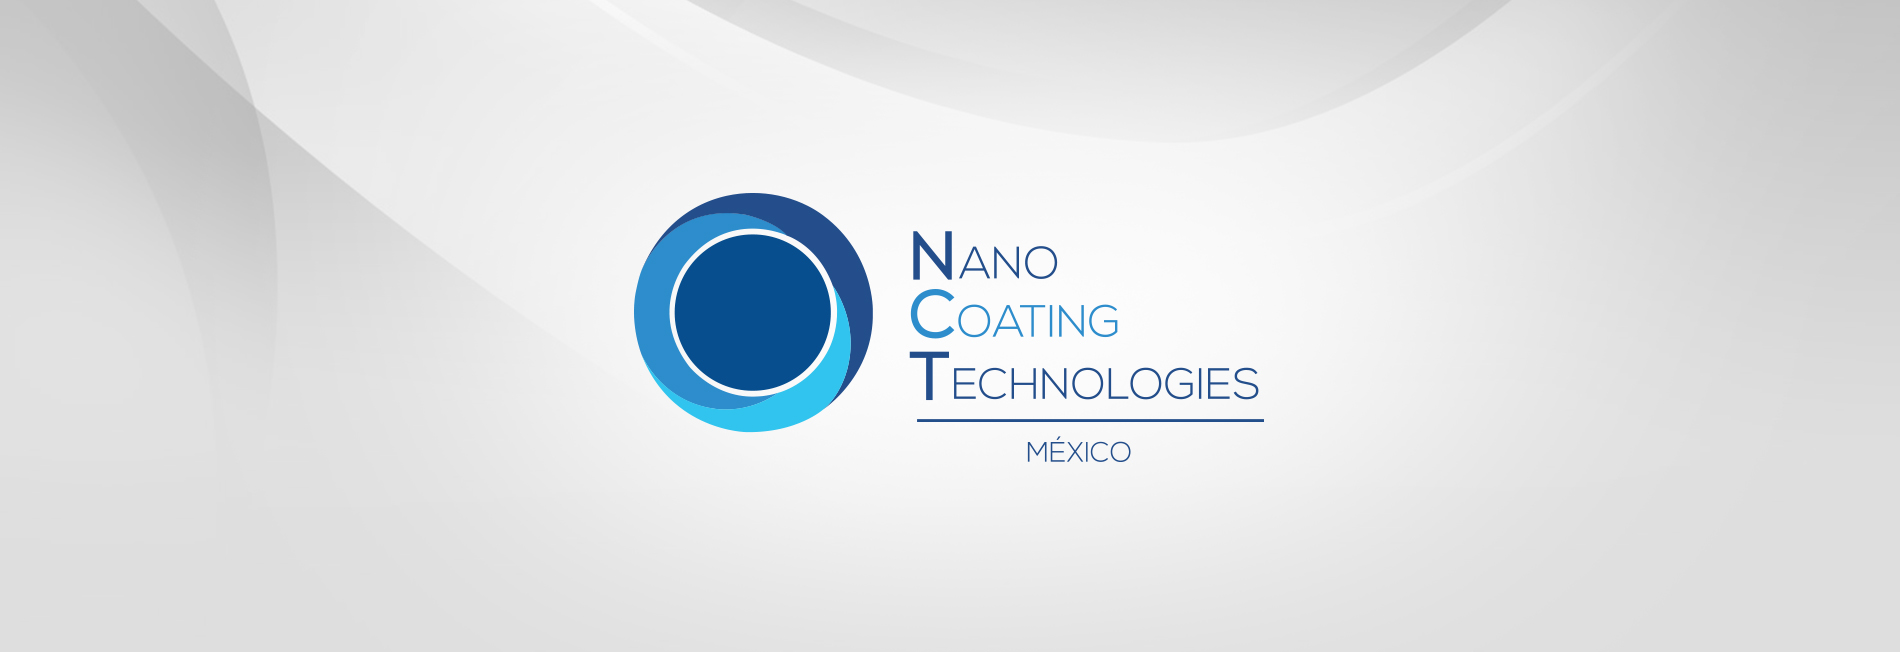 Nano Coating Technologies